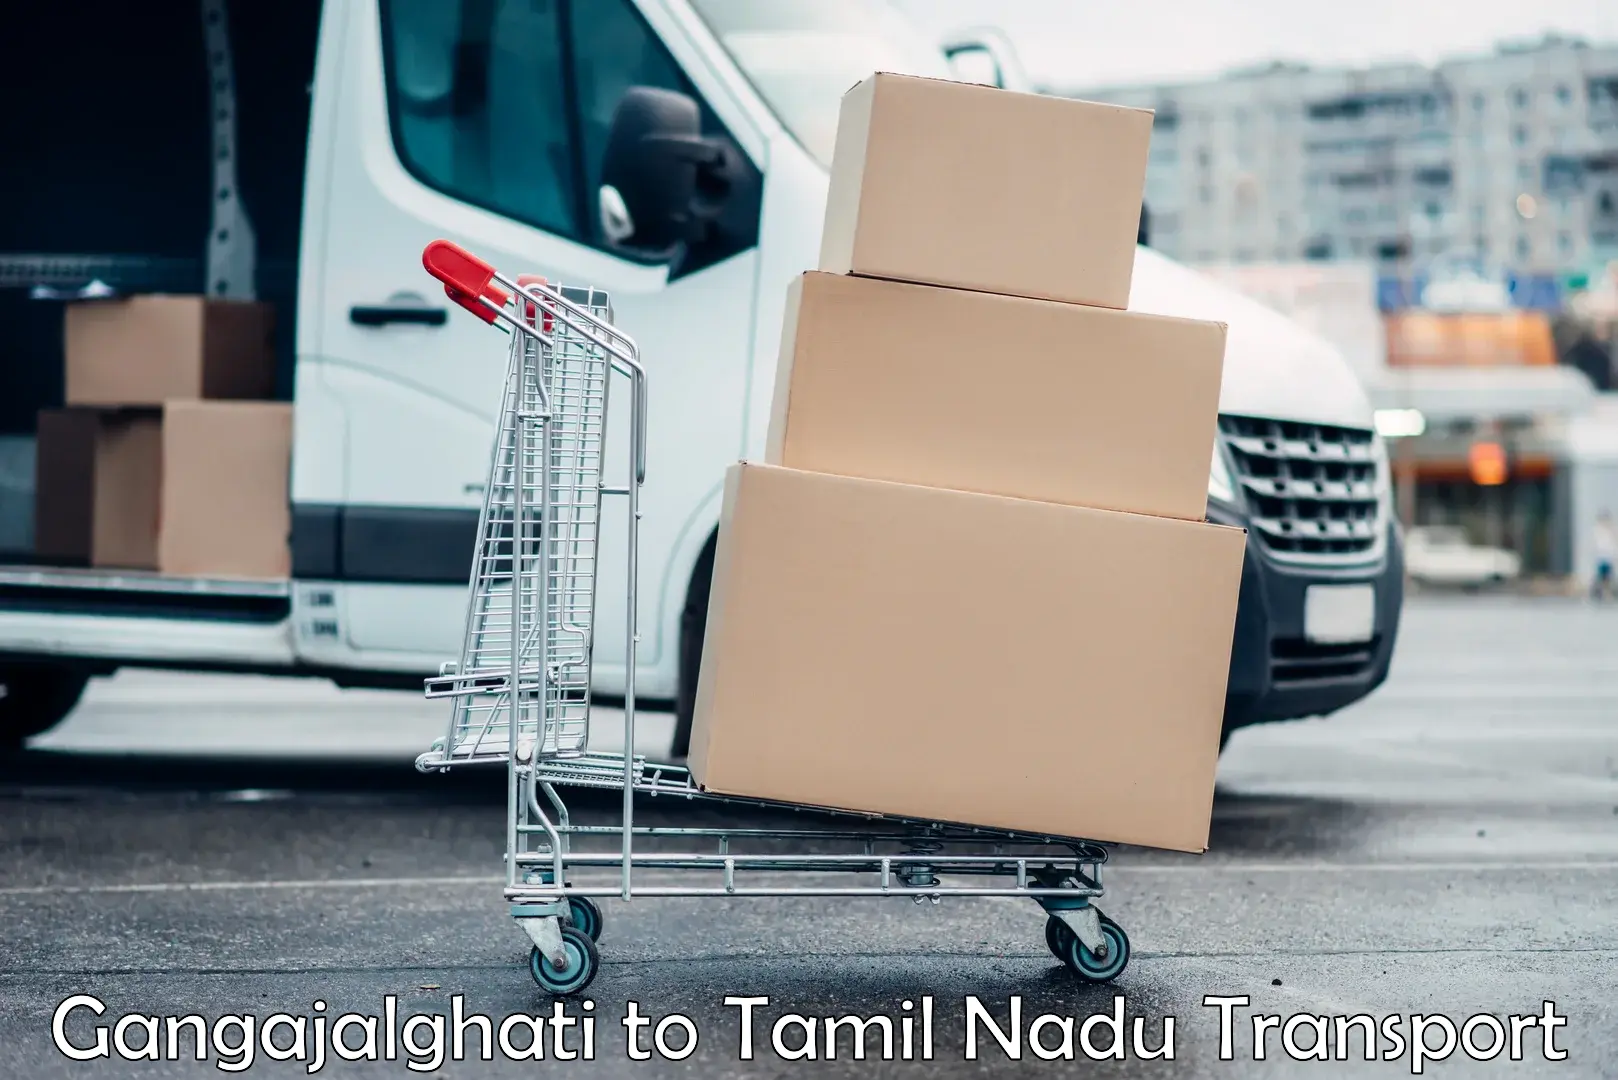 Delivery service Gangajalghati to IIIT Tiruchirappalli